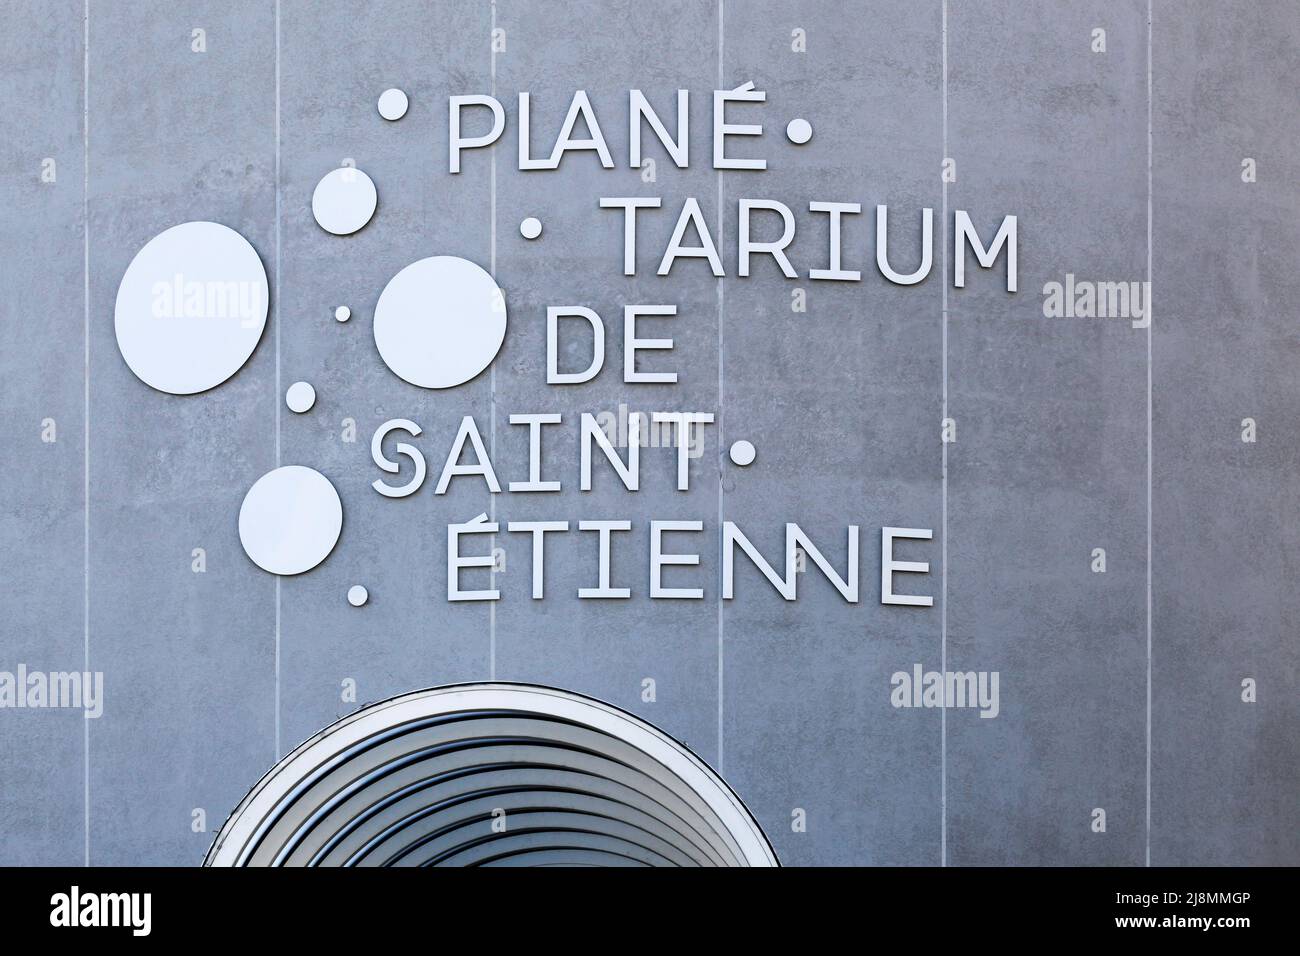 Saint Etienne, France - June 21, 2020: Facade of the planetarium in Saint-Etienne, France Stock Photo